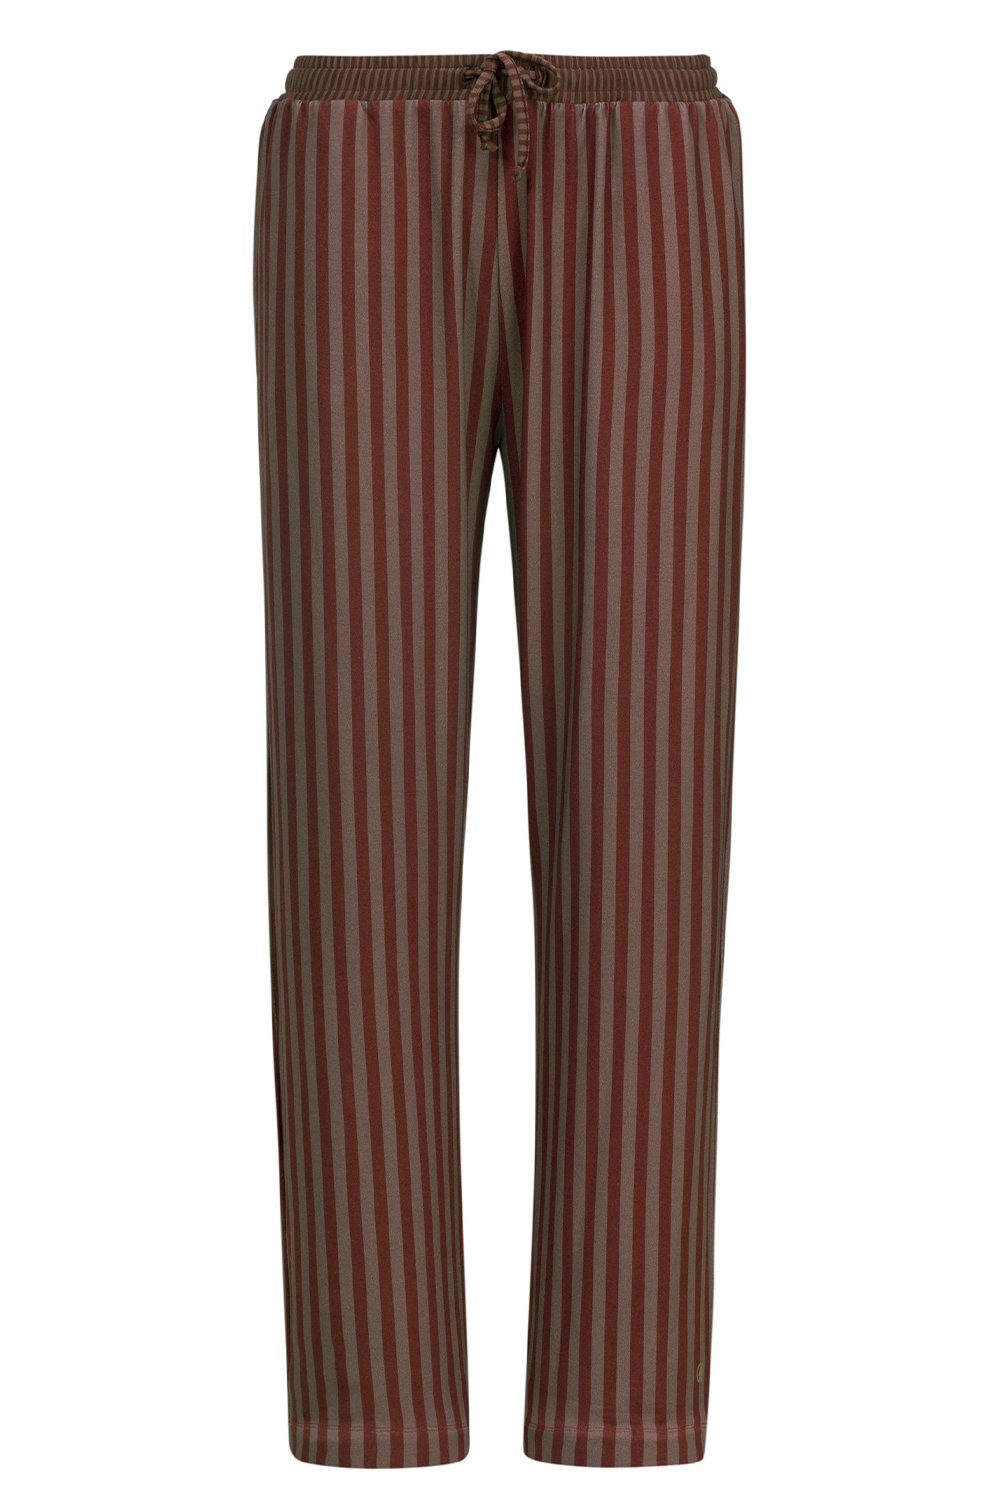 Trousers Long Stripe Loungehose Sumo Studio Belin brown/red 51500718-734 PiP